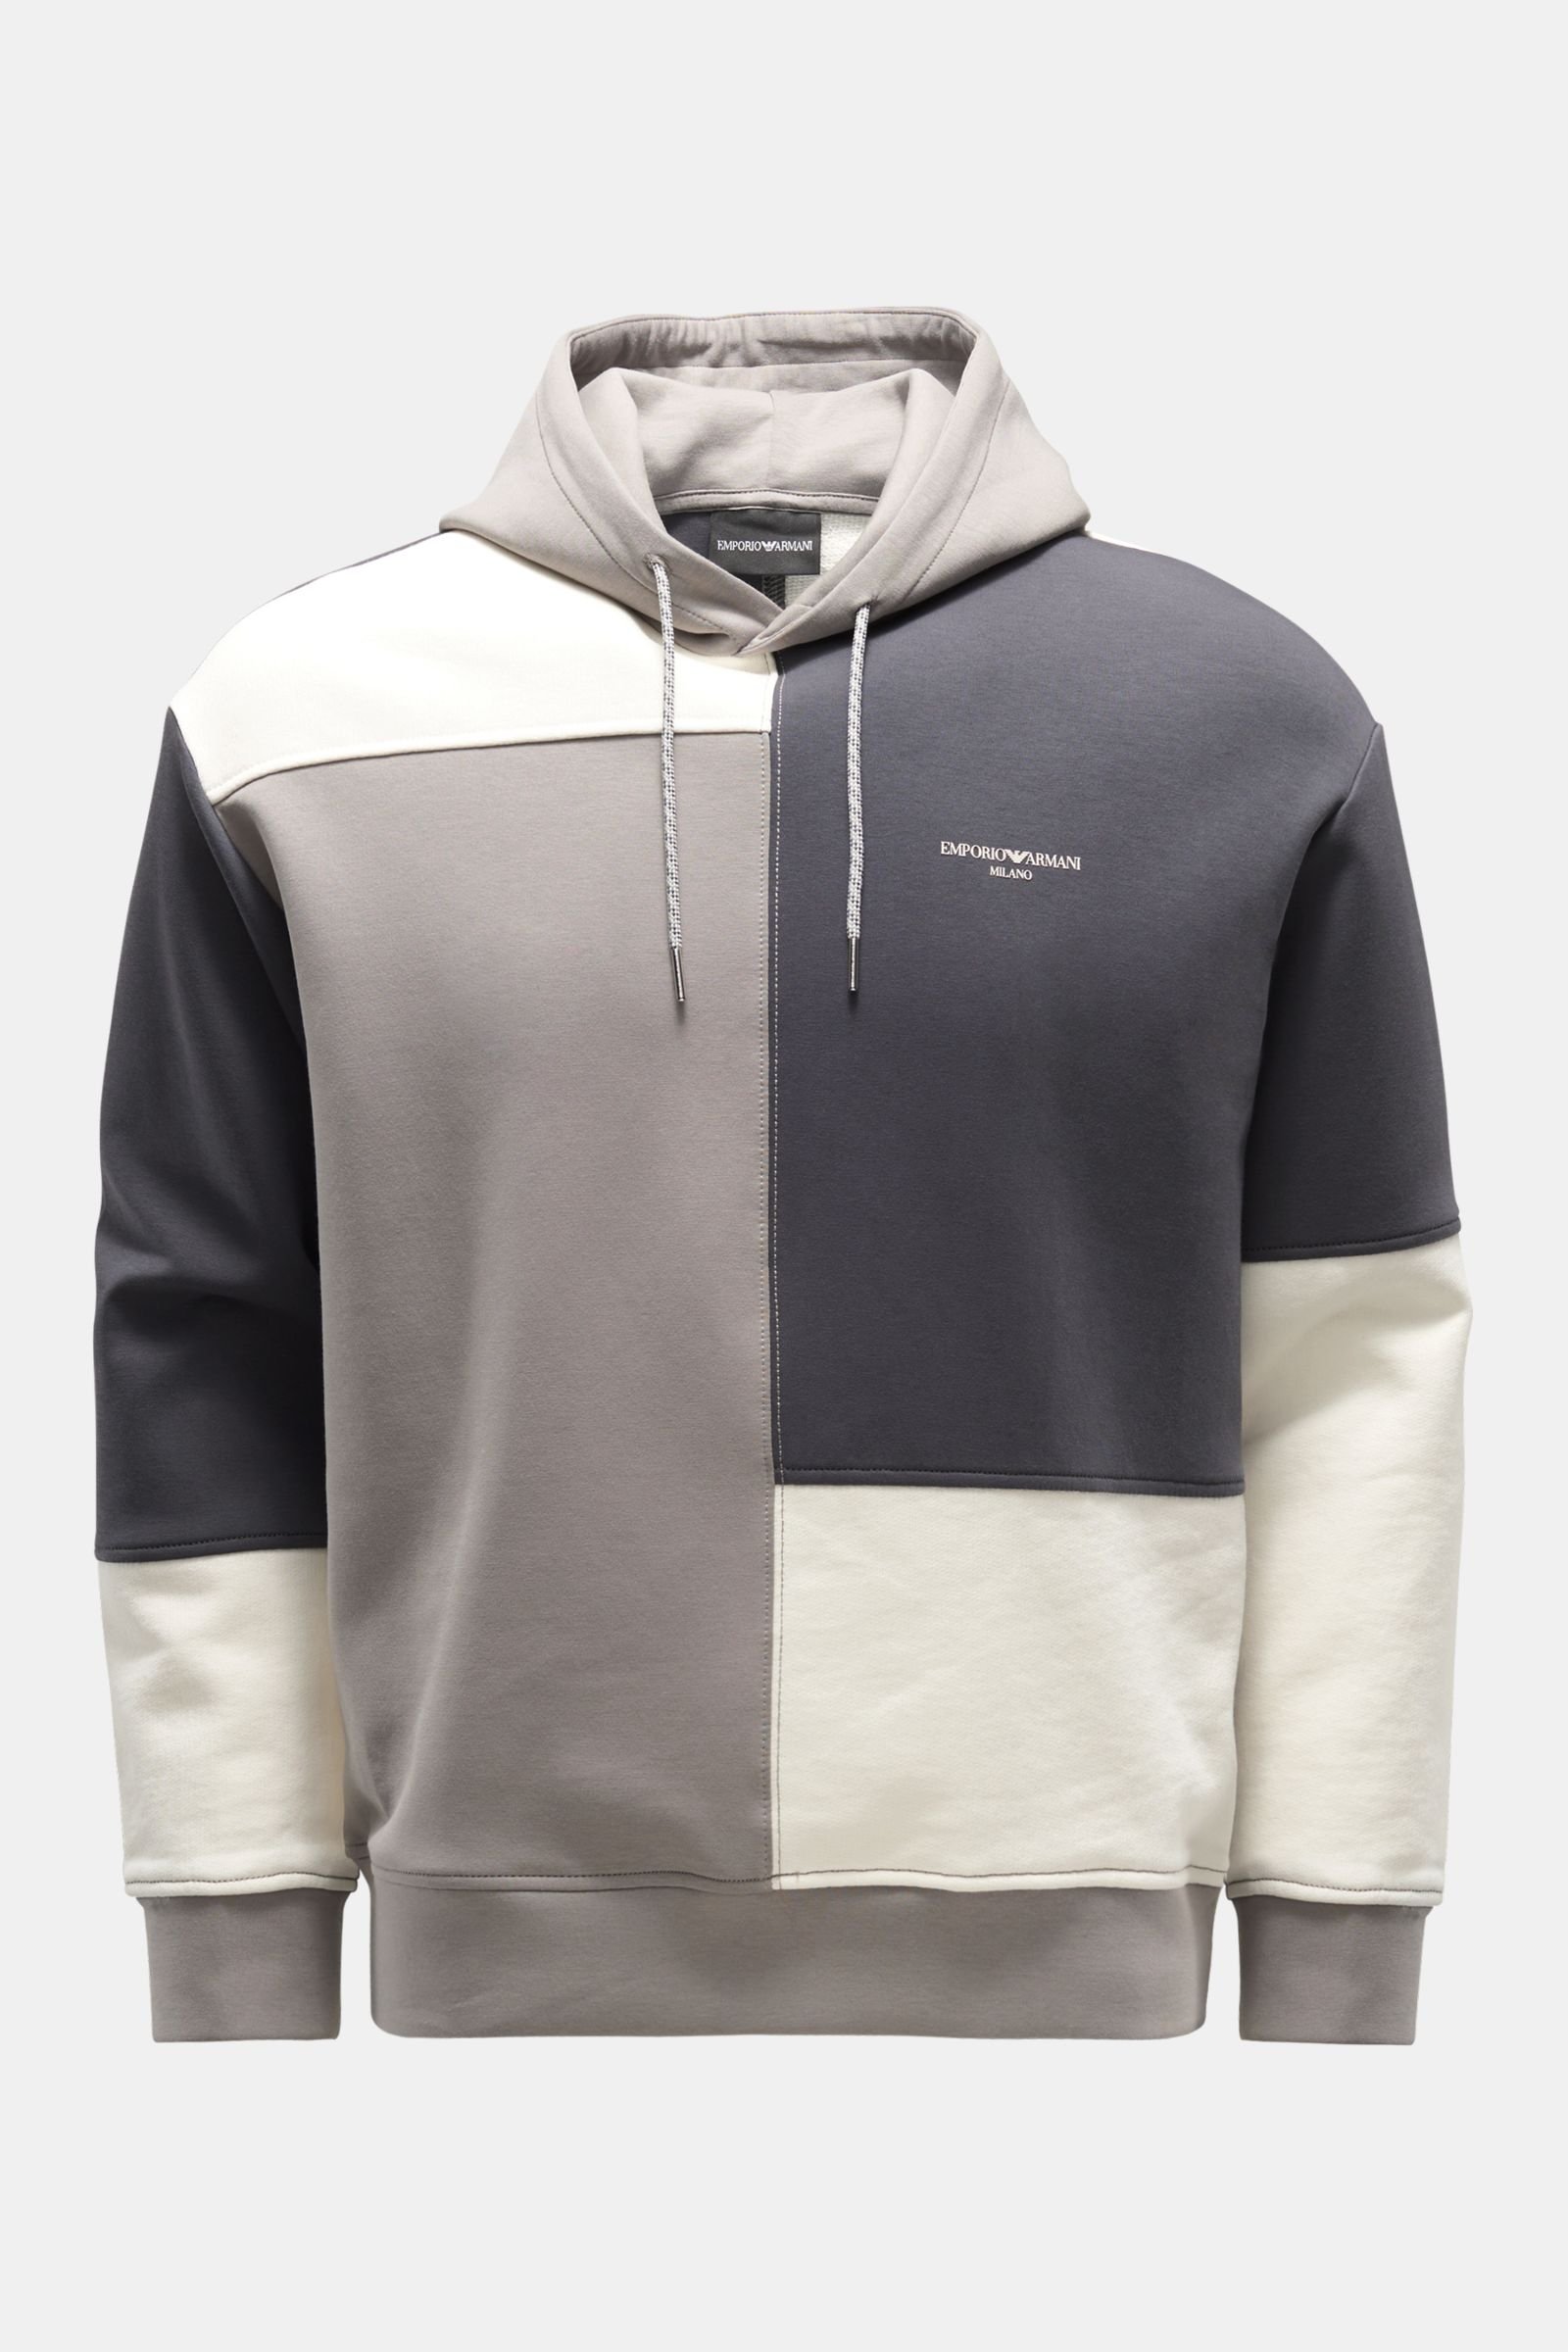 Hooded jumper grey/dark grey/off-white